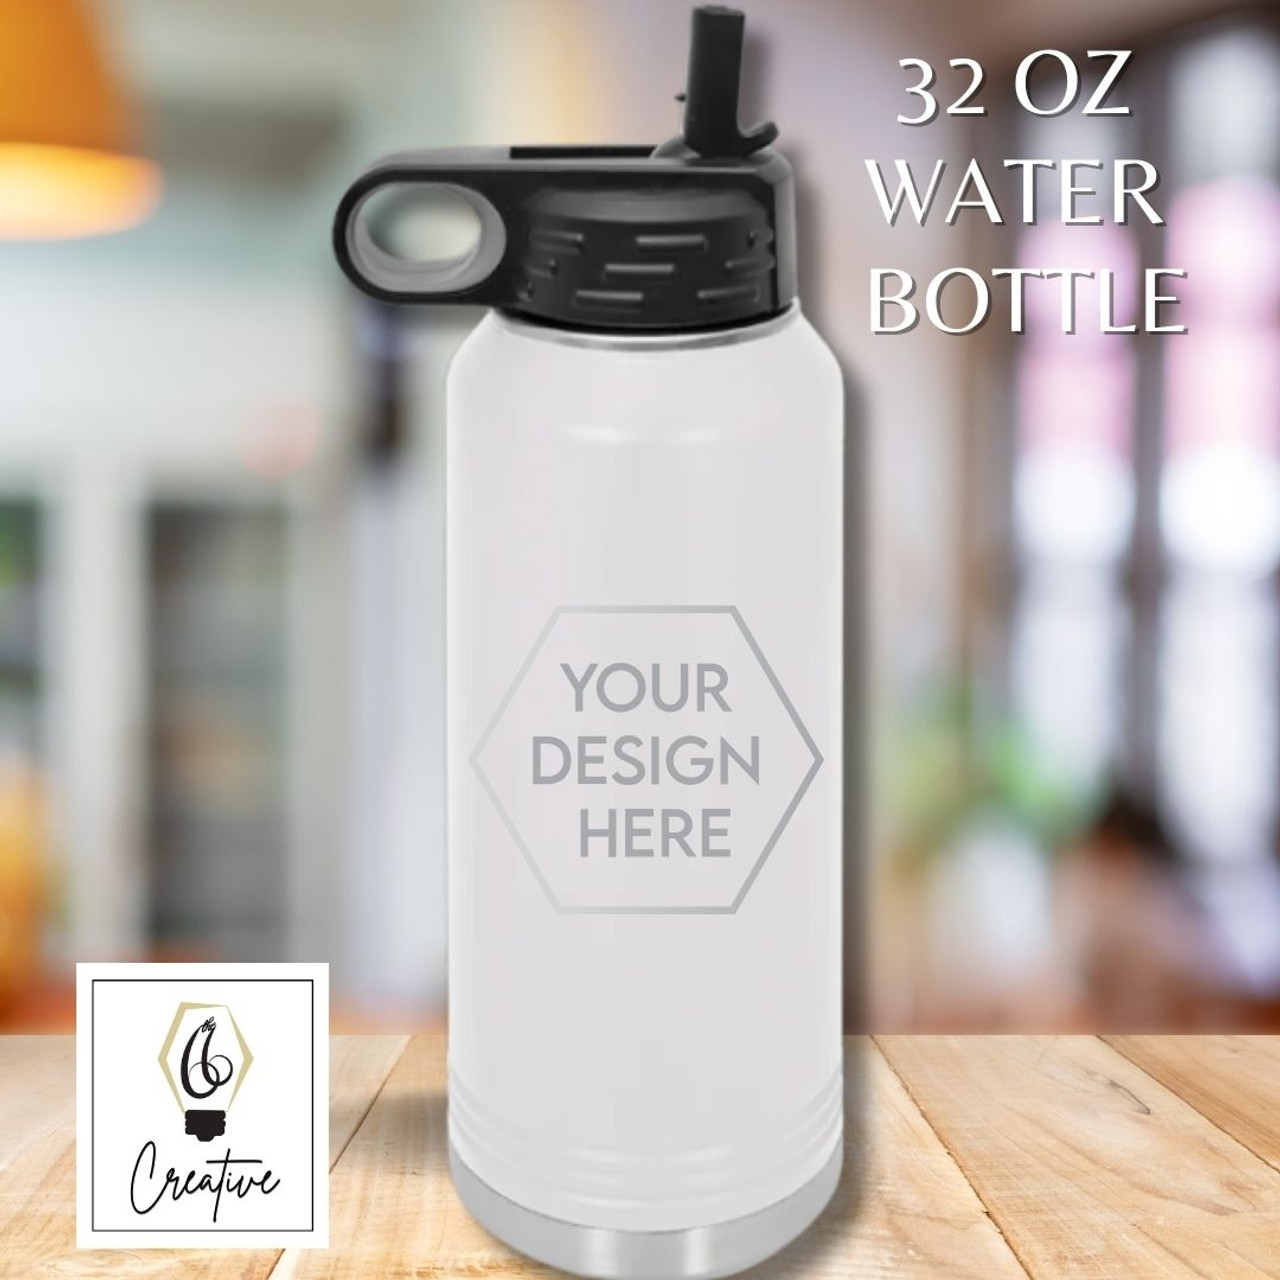 32 oz Insulated Polar Water Bottle